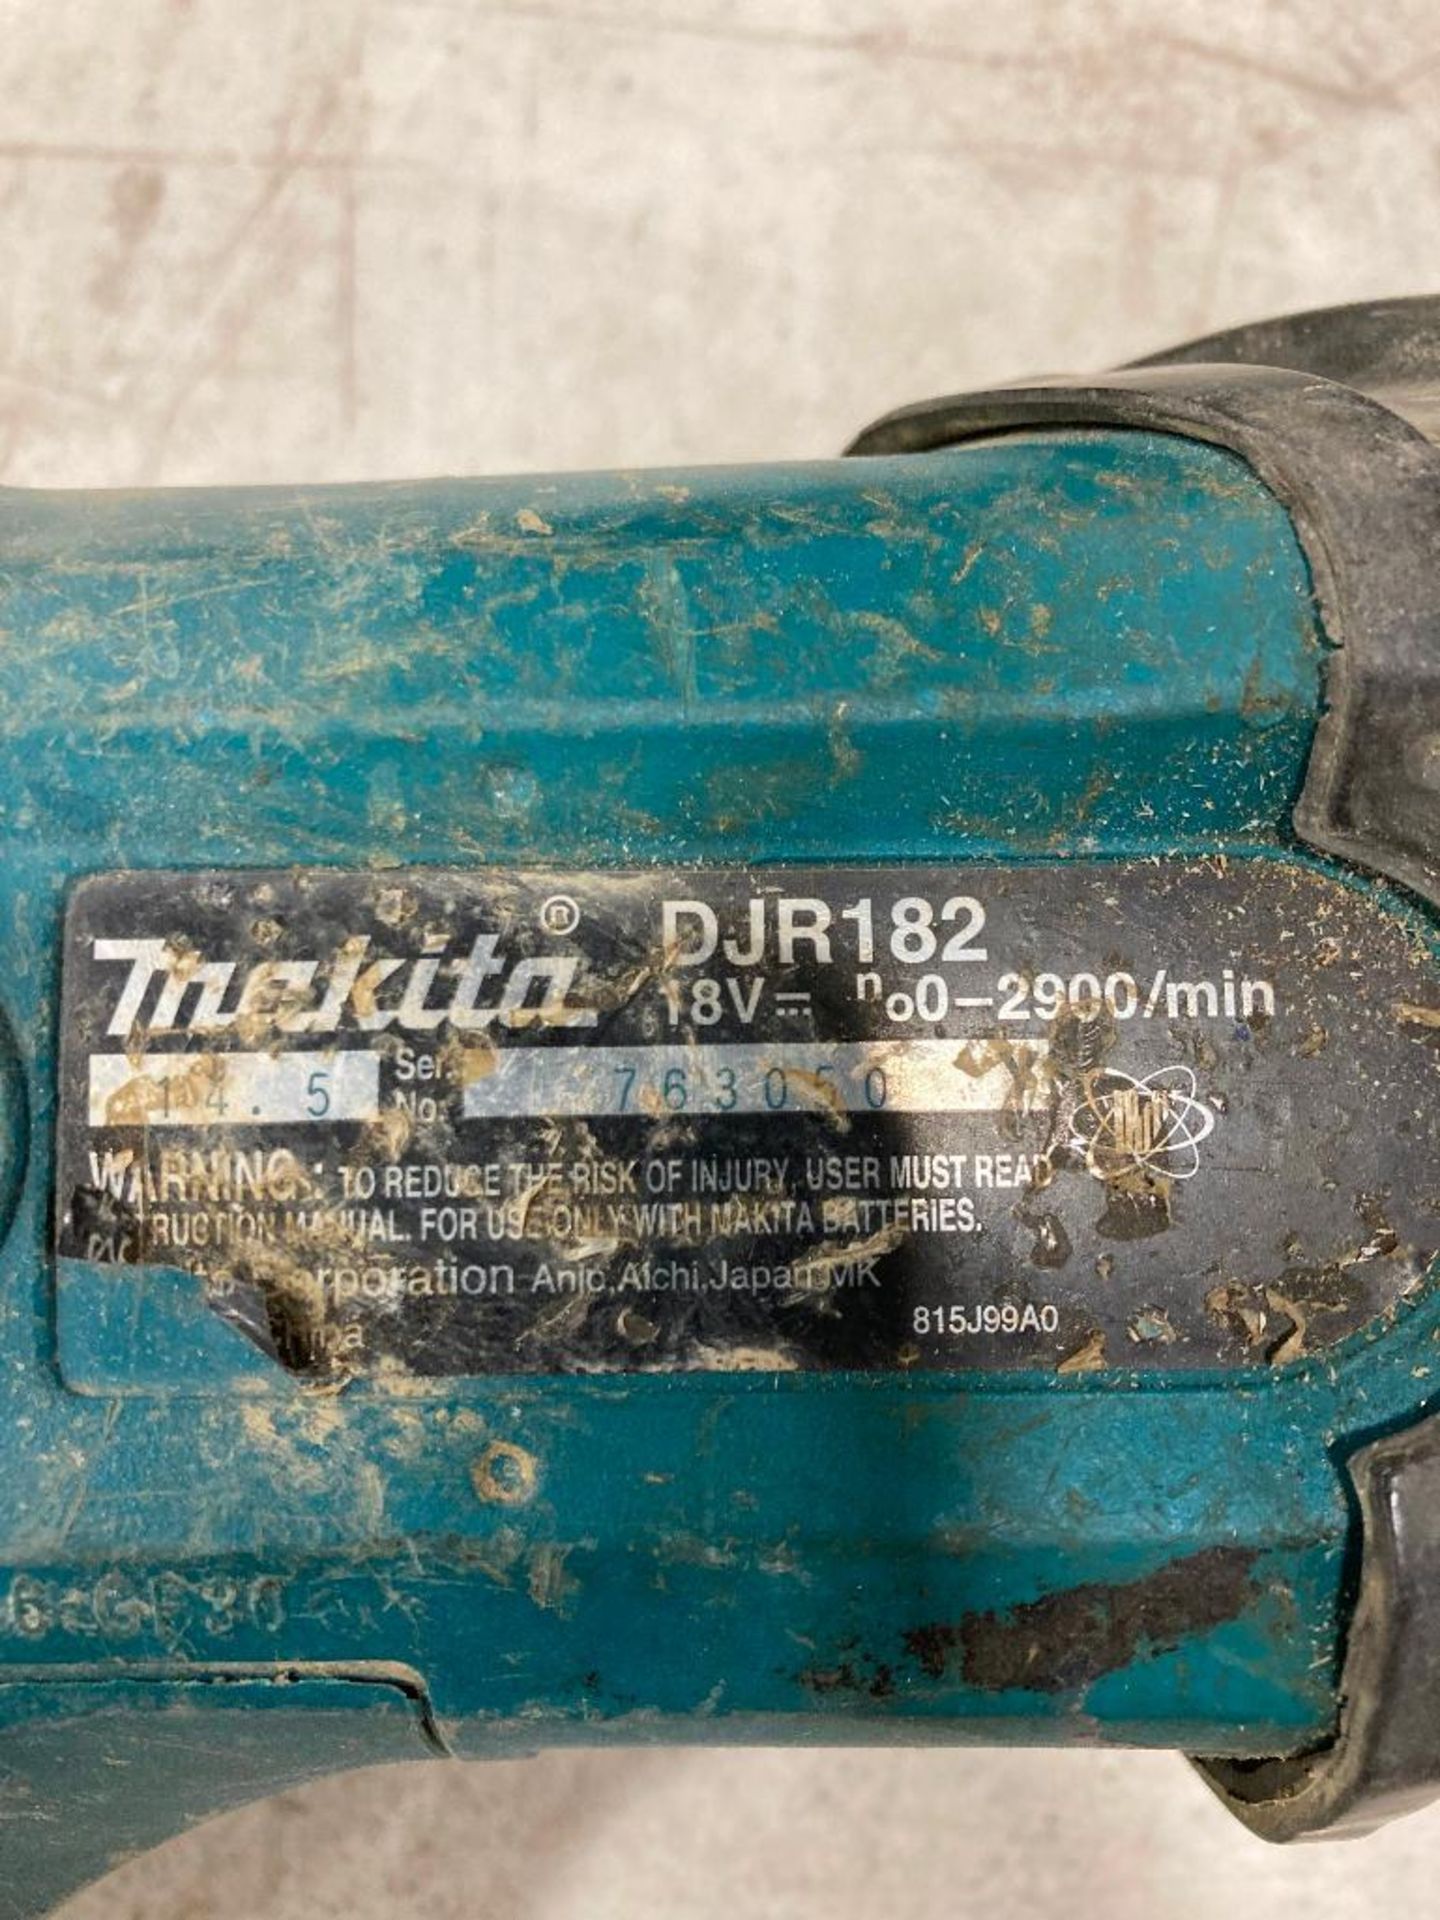 Makita Reciprocating Saw and Battery Charger - Image 4 of 5